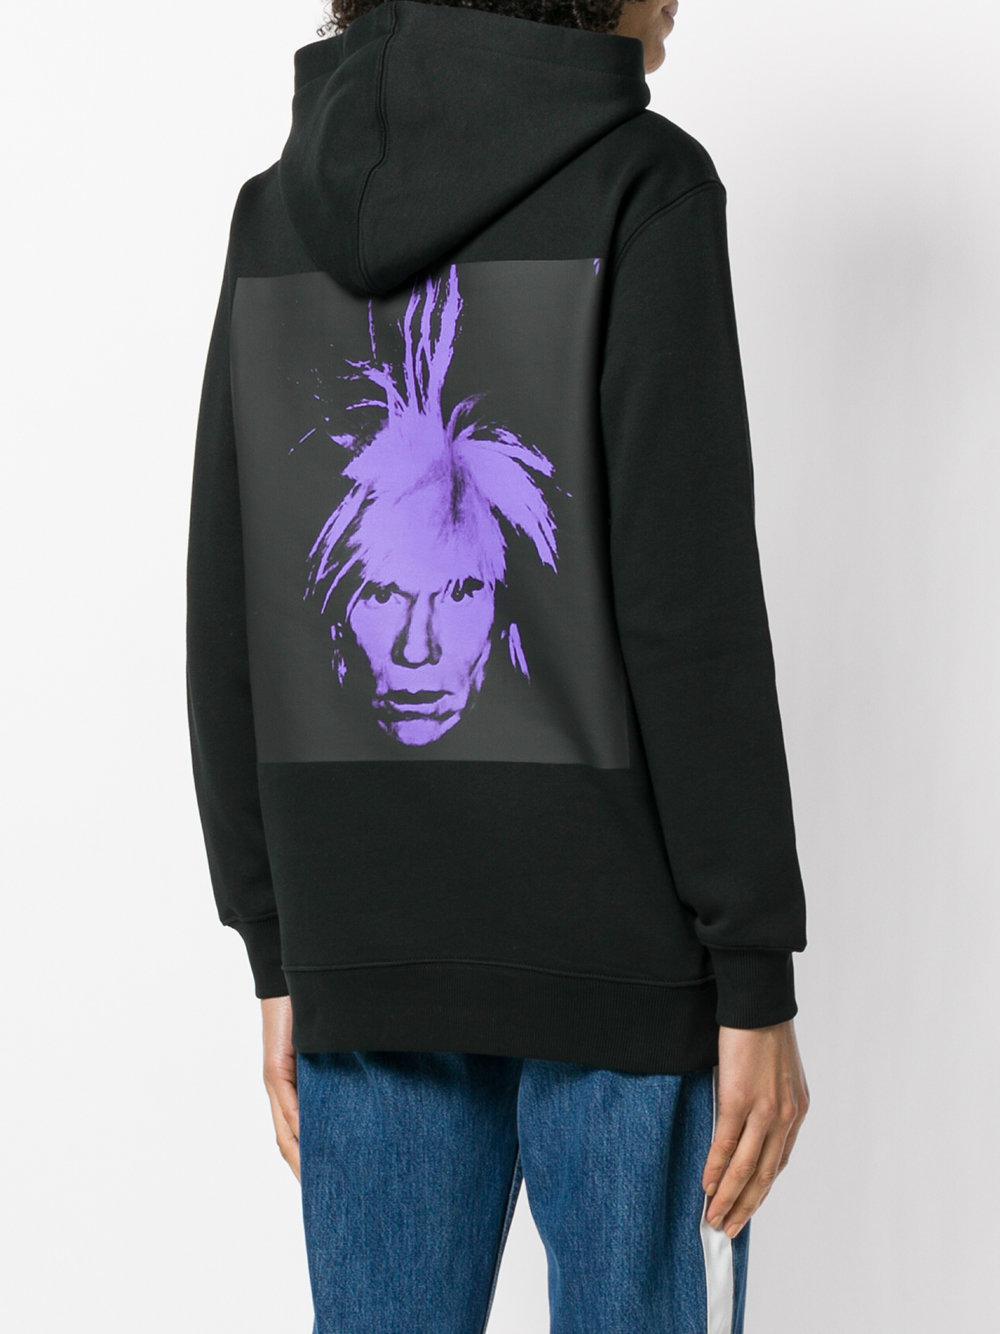 Calvin Klein Cotton Andy Warhol Back Print Hoodie in Black - Lyst